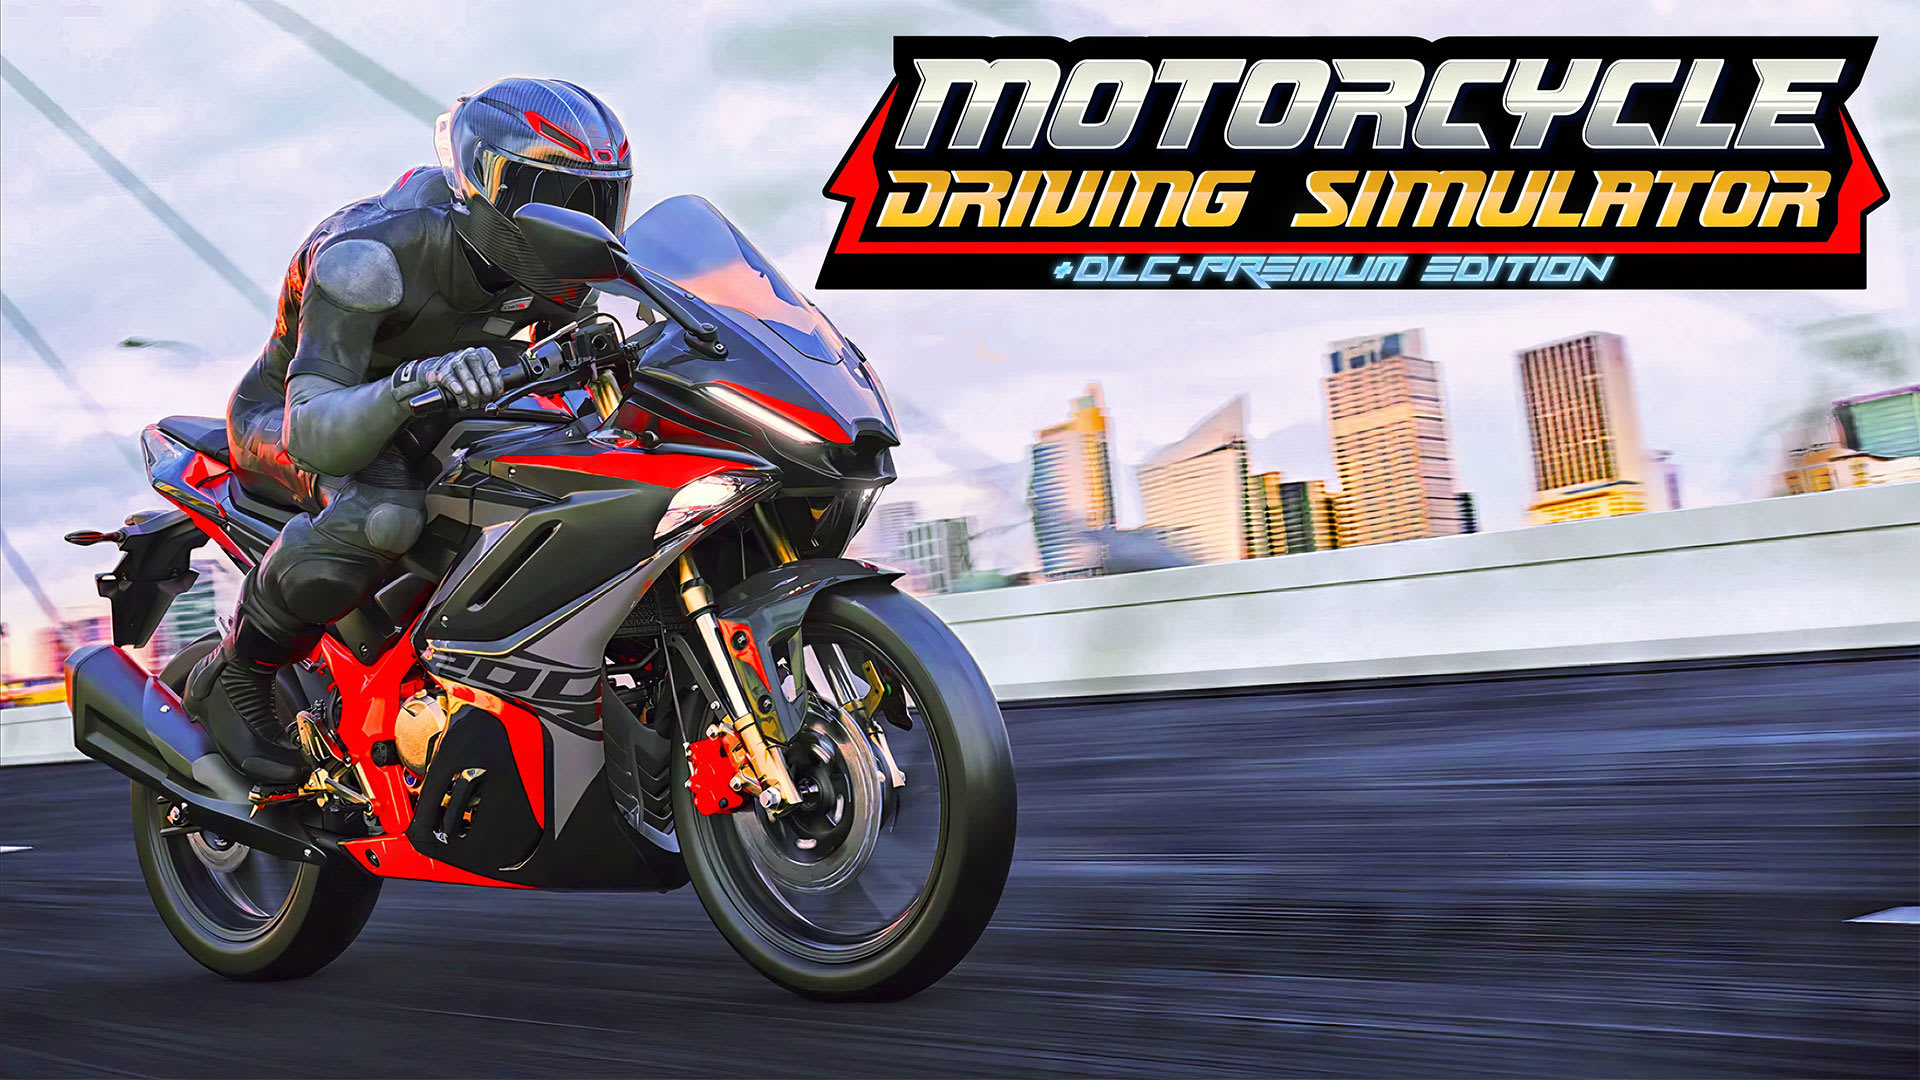 Motorcycle Driving Simulator + DLC - PREMIUM EDITION